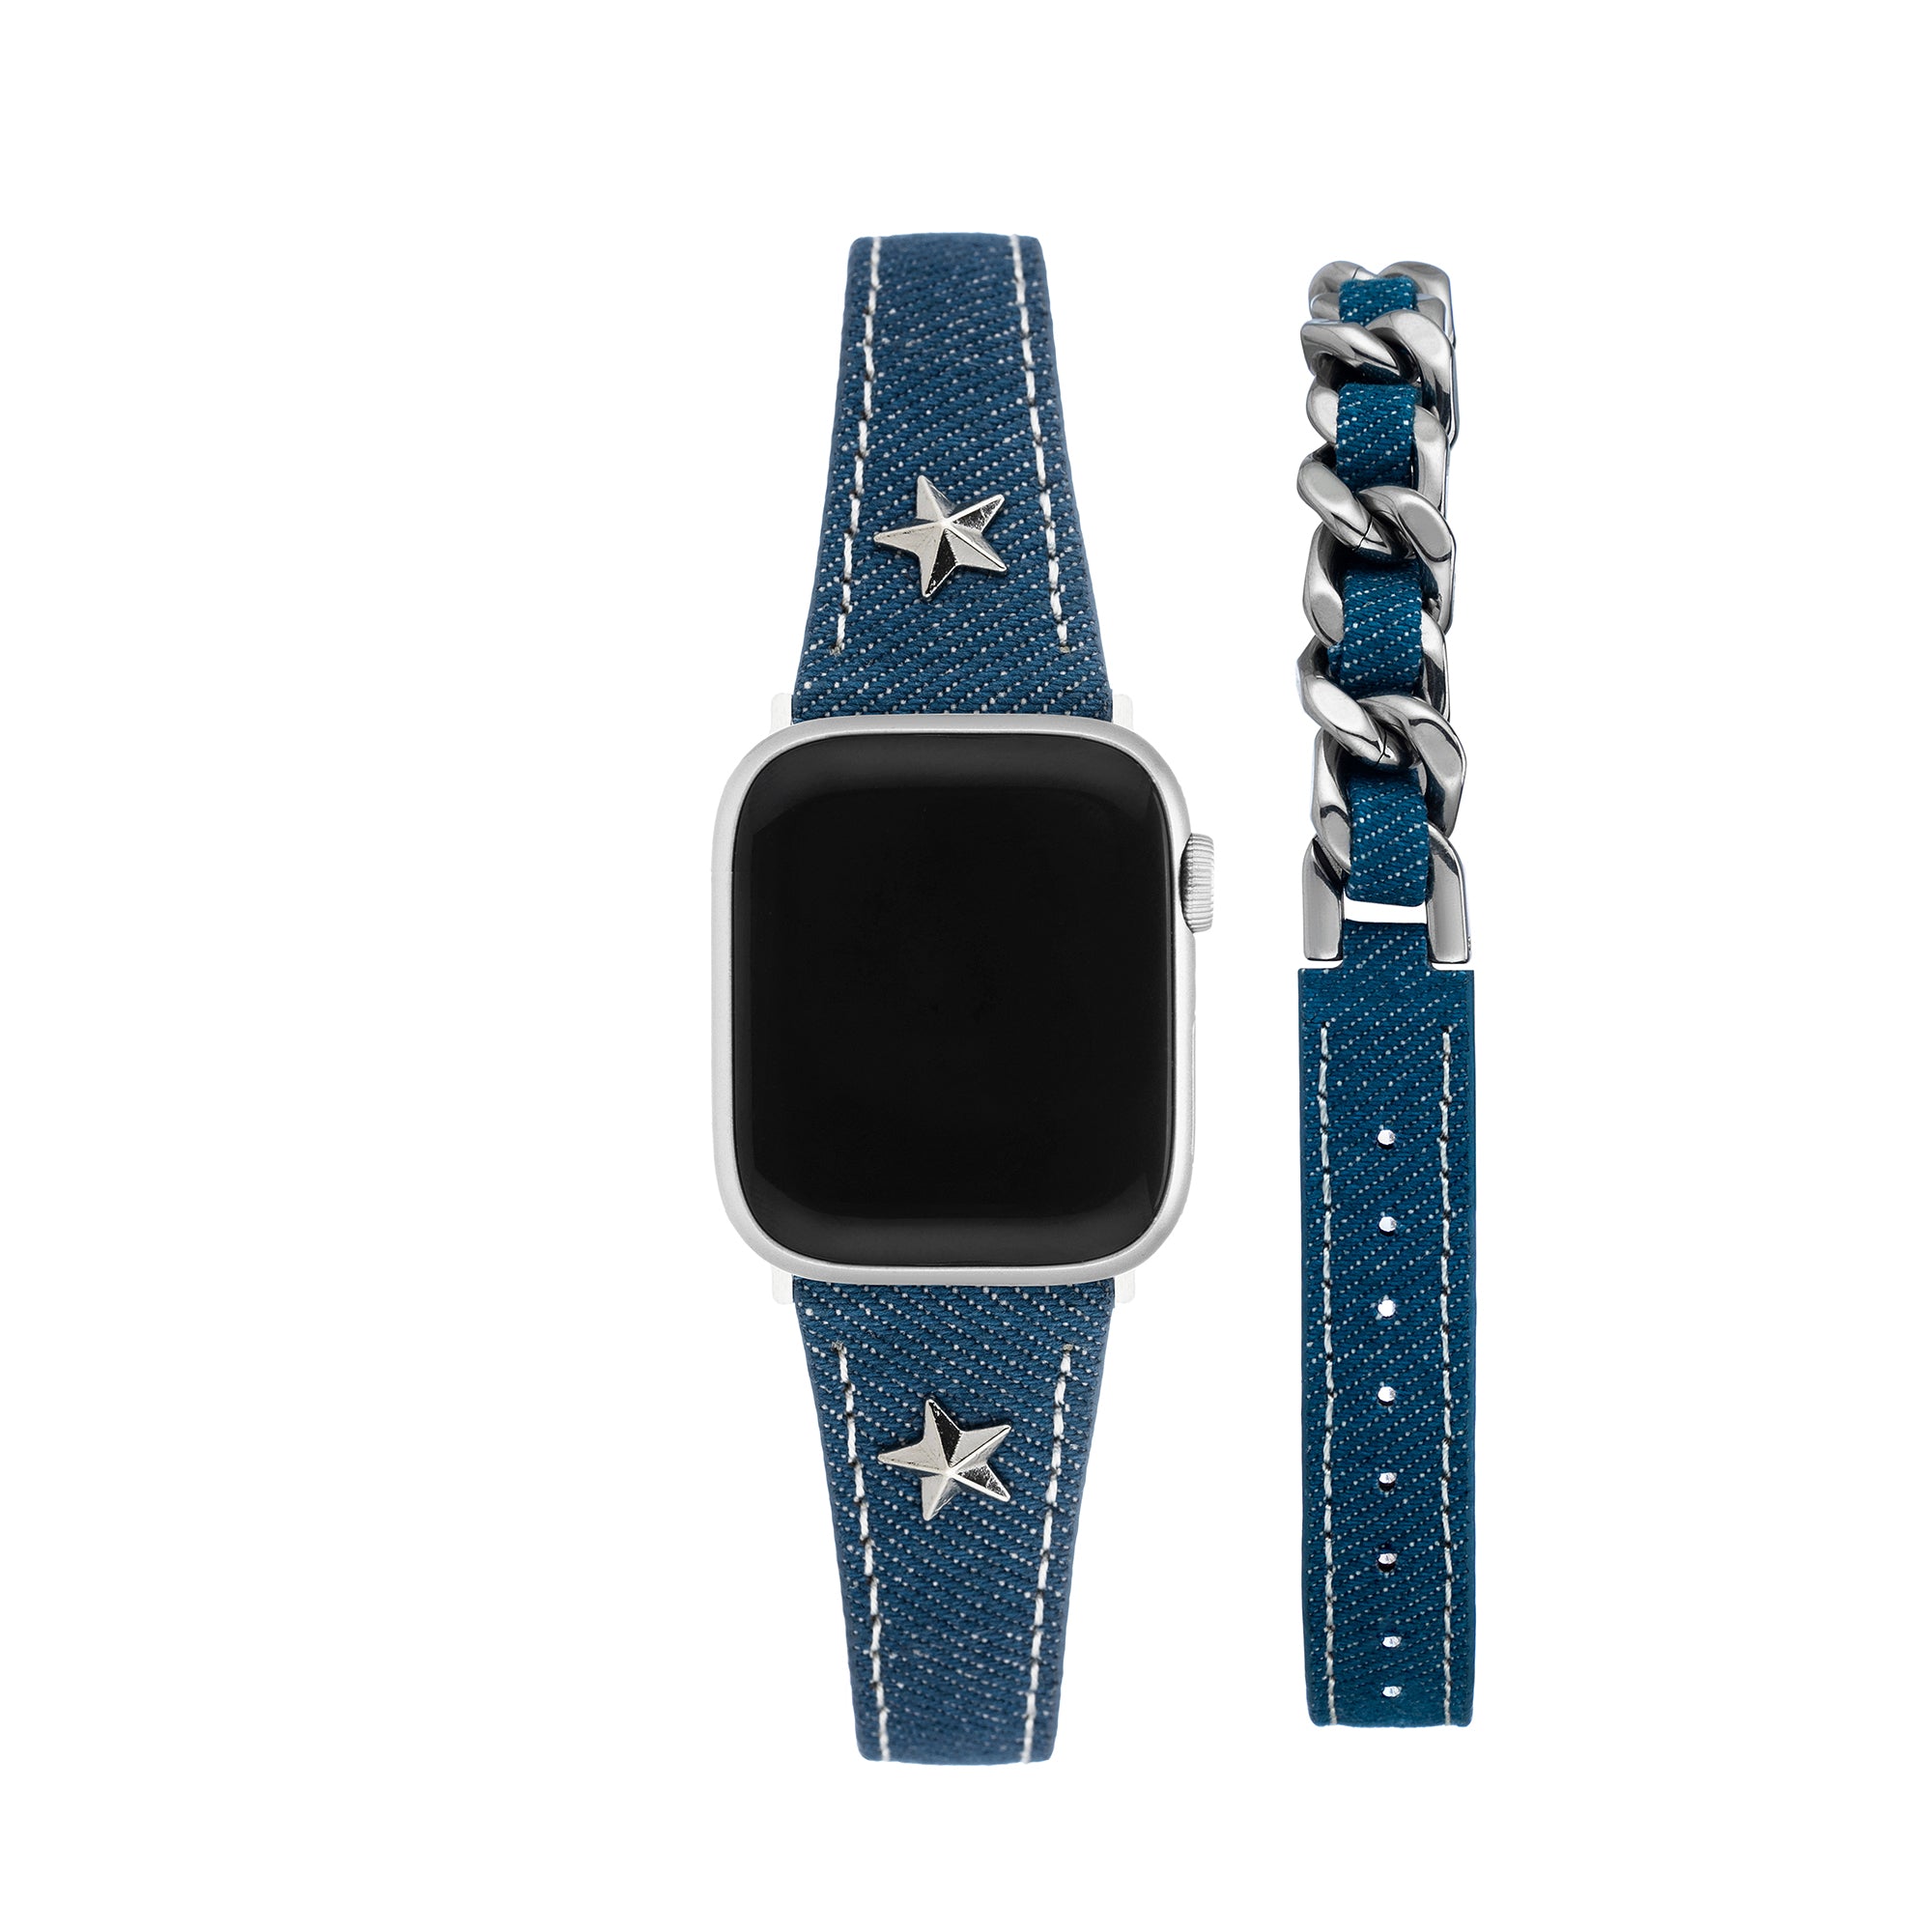 Double-layered Denim Apple Watch Band